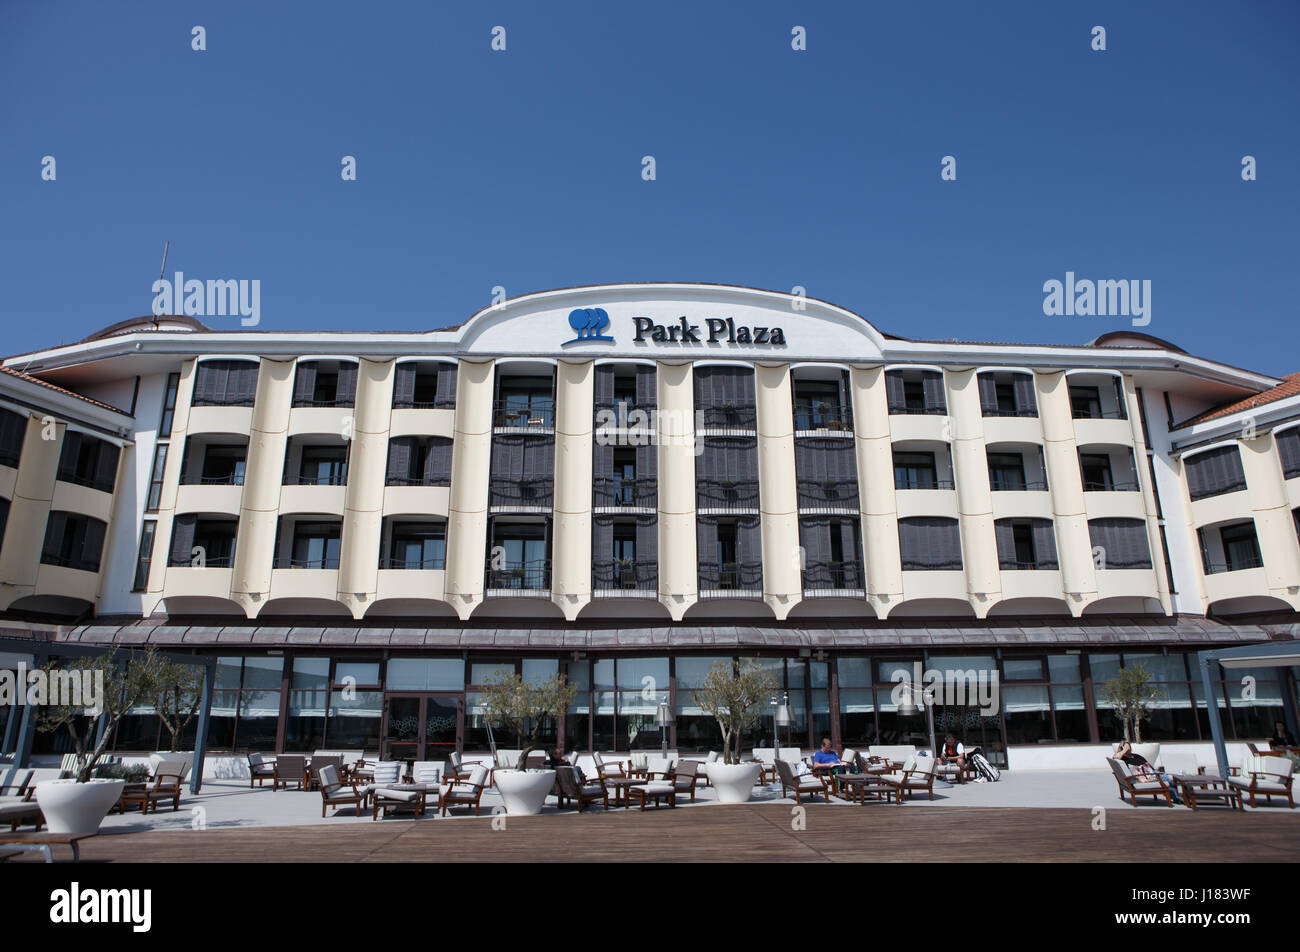 Hotel Park Plaza,Verudela, Pula, Istria, Croatia,Europe Stock Photo - Alamy